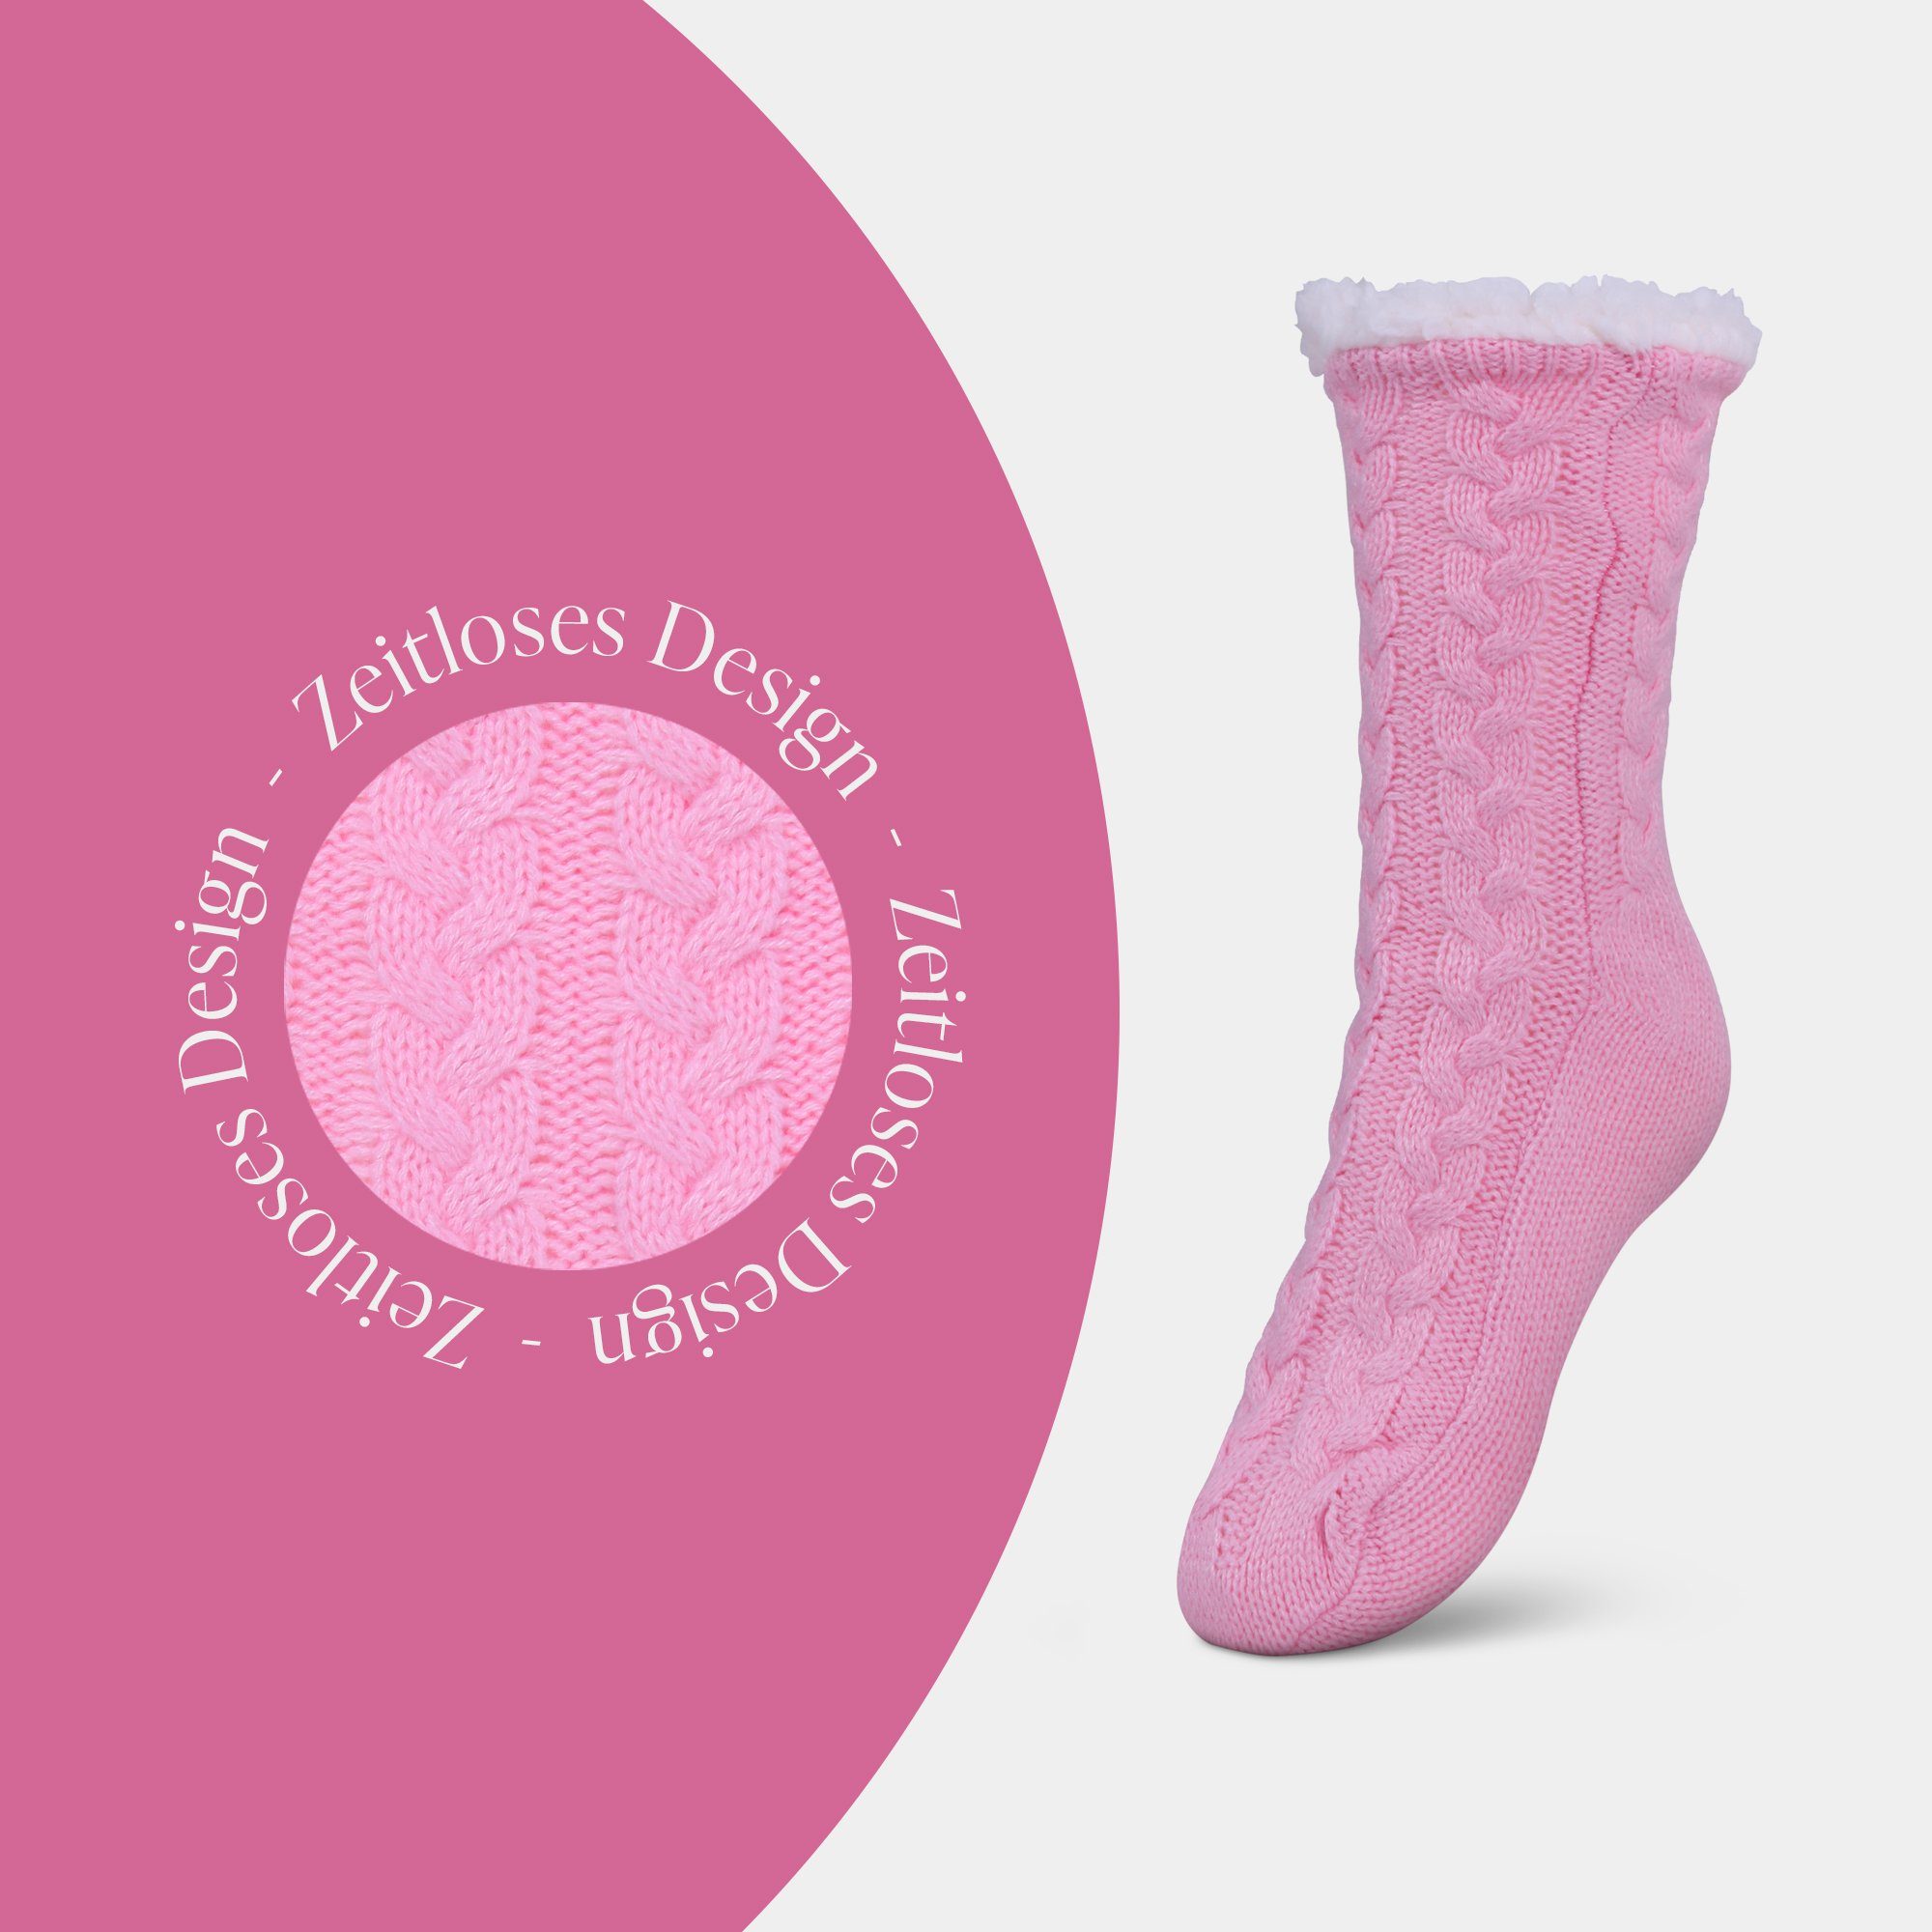 Bestlivings ABS-Socken Teddyfutter, plüschig mit ) (1-Paar) Socken Hüttensocken Pink Hüttensocken Stoppersocken Haussocken Zopfmuster ( 36-42